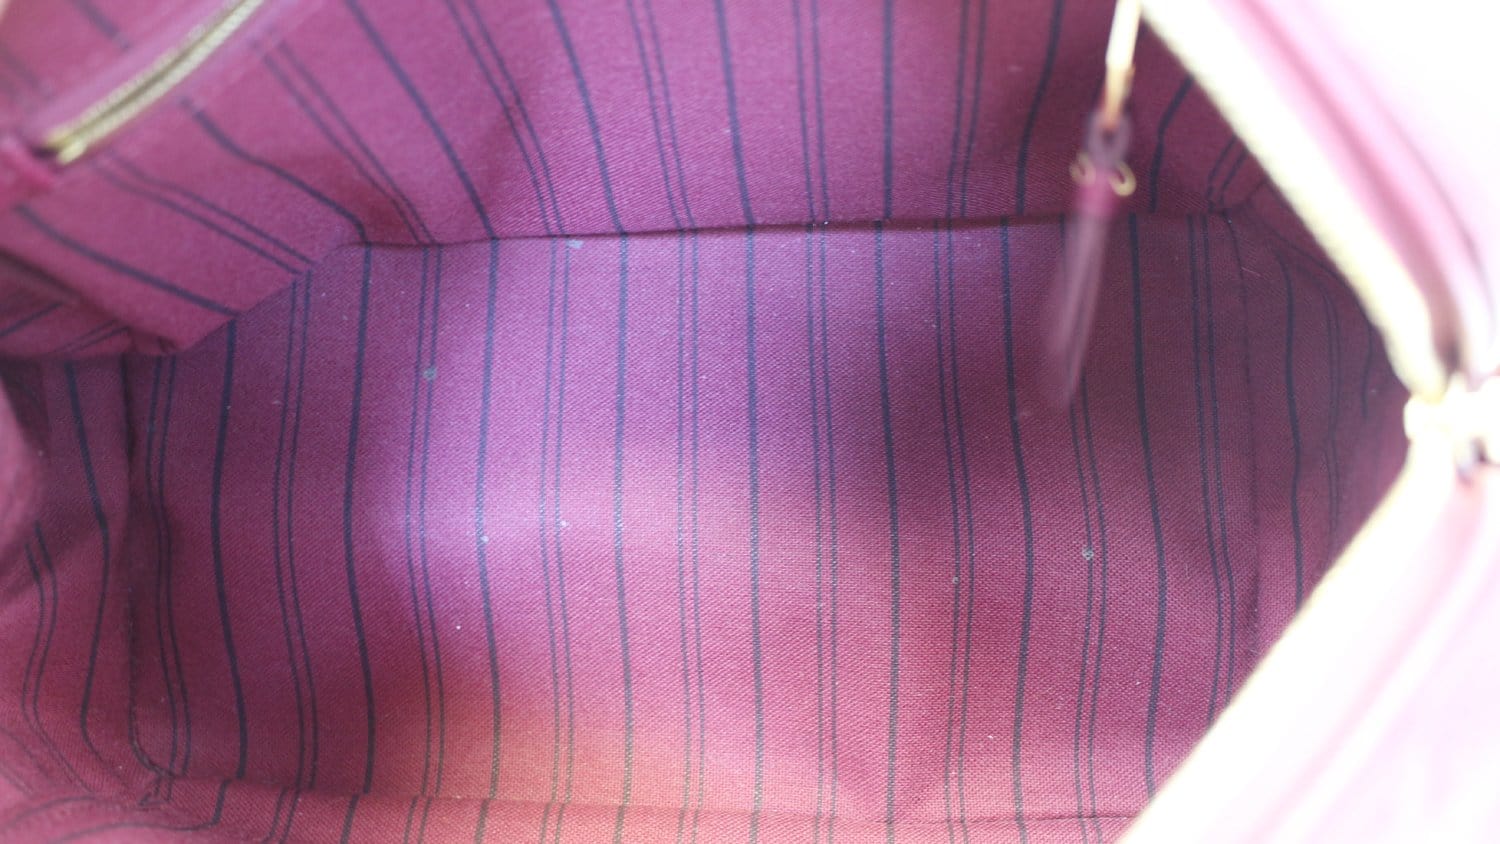 Speedy Bandoulière 20 Bag - Luxury Monogram Empreinte Leather Pink